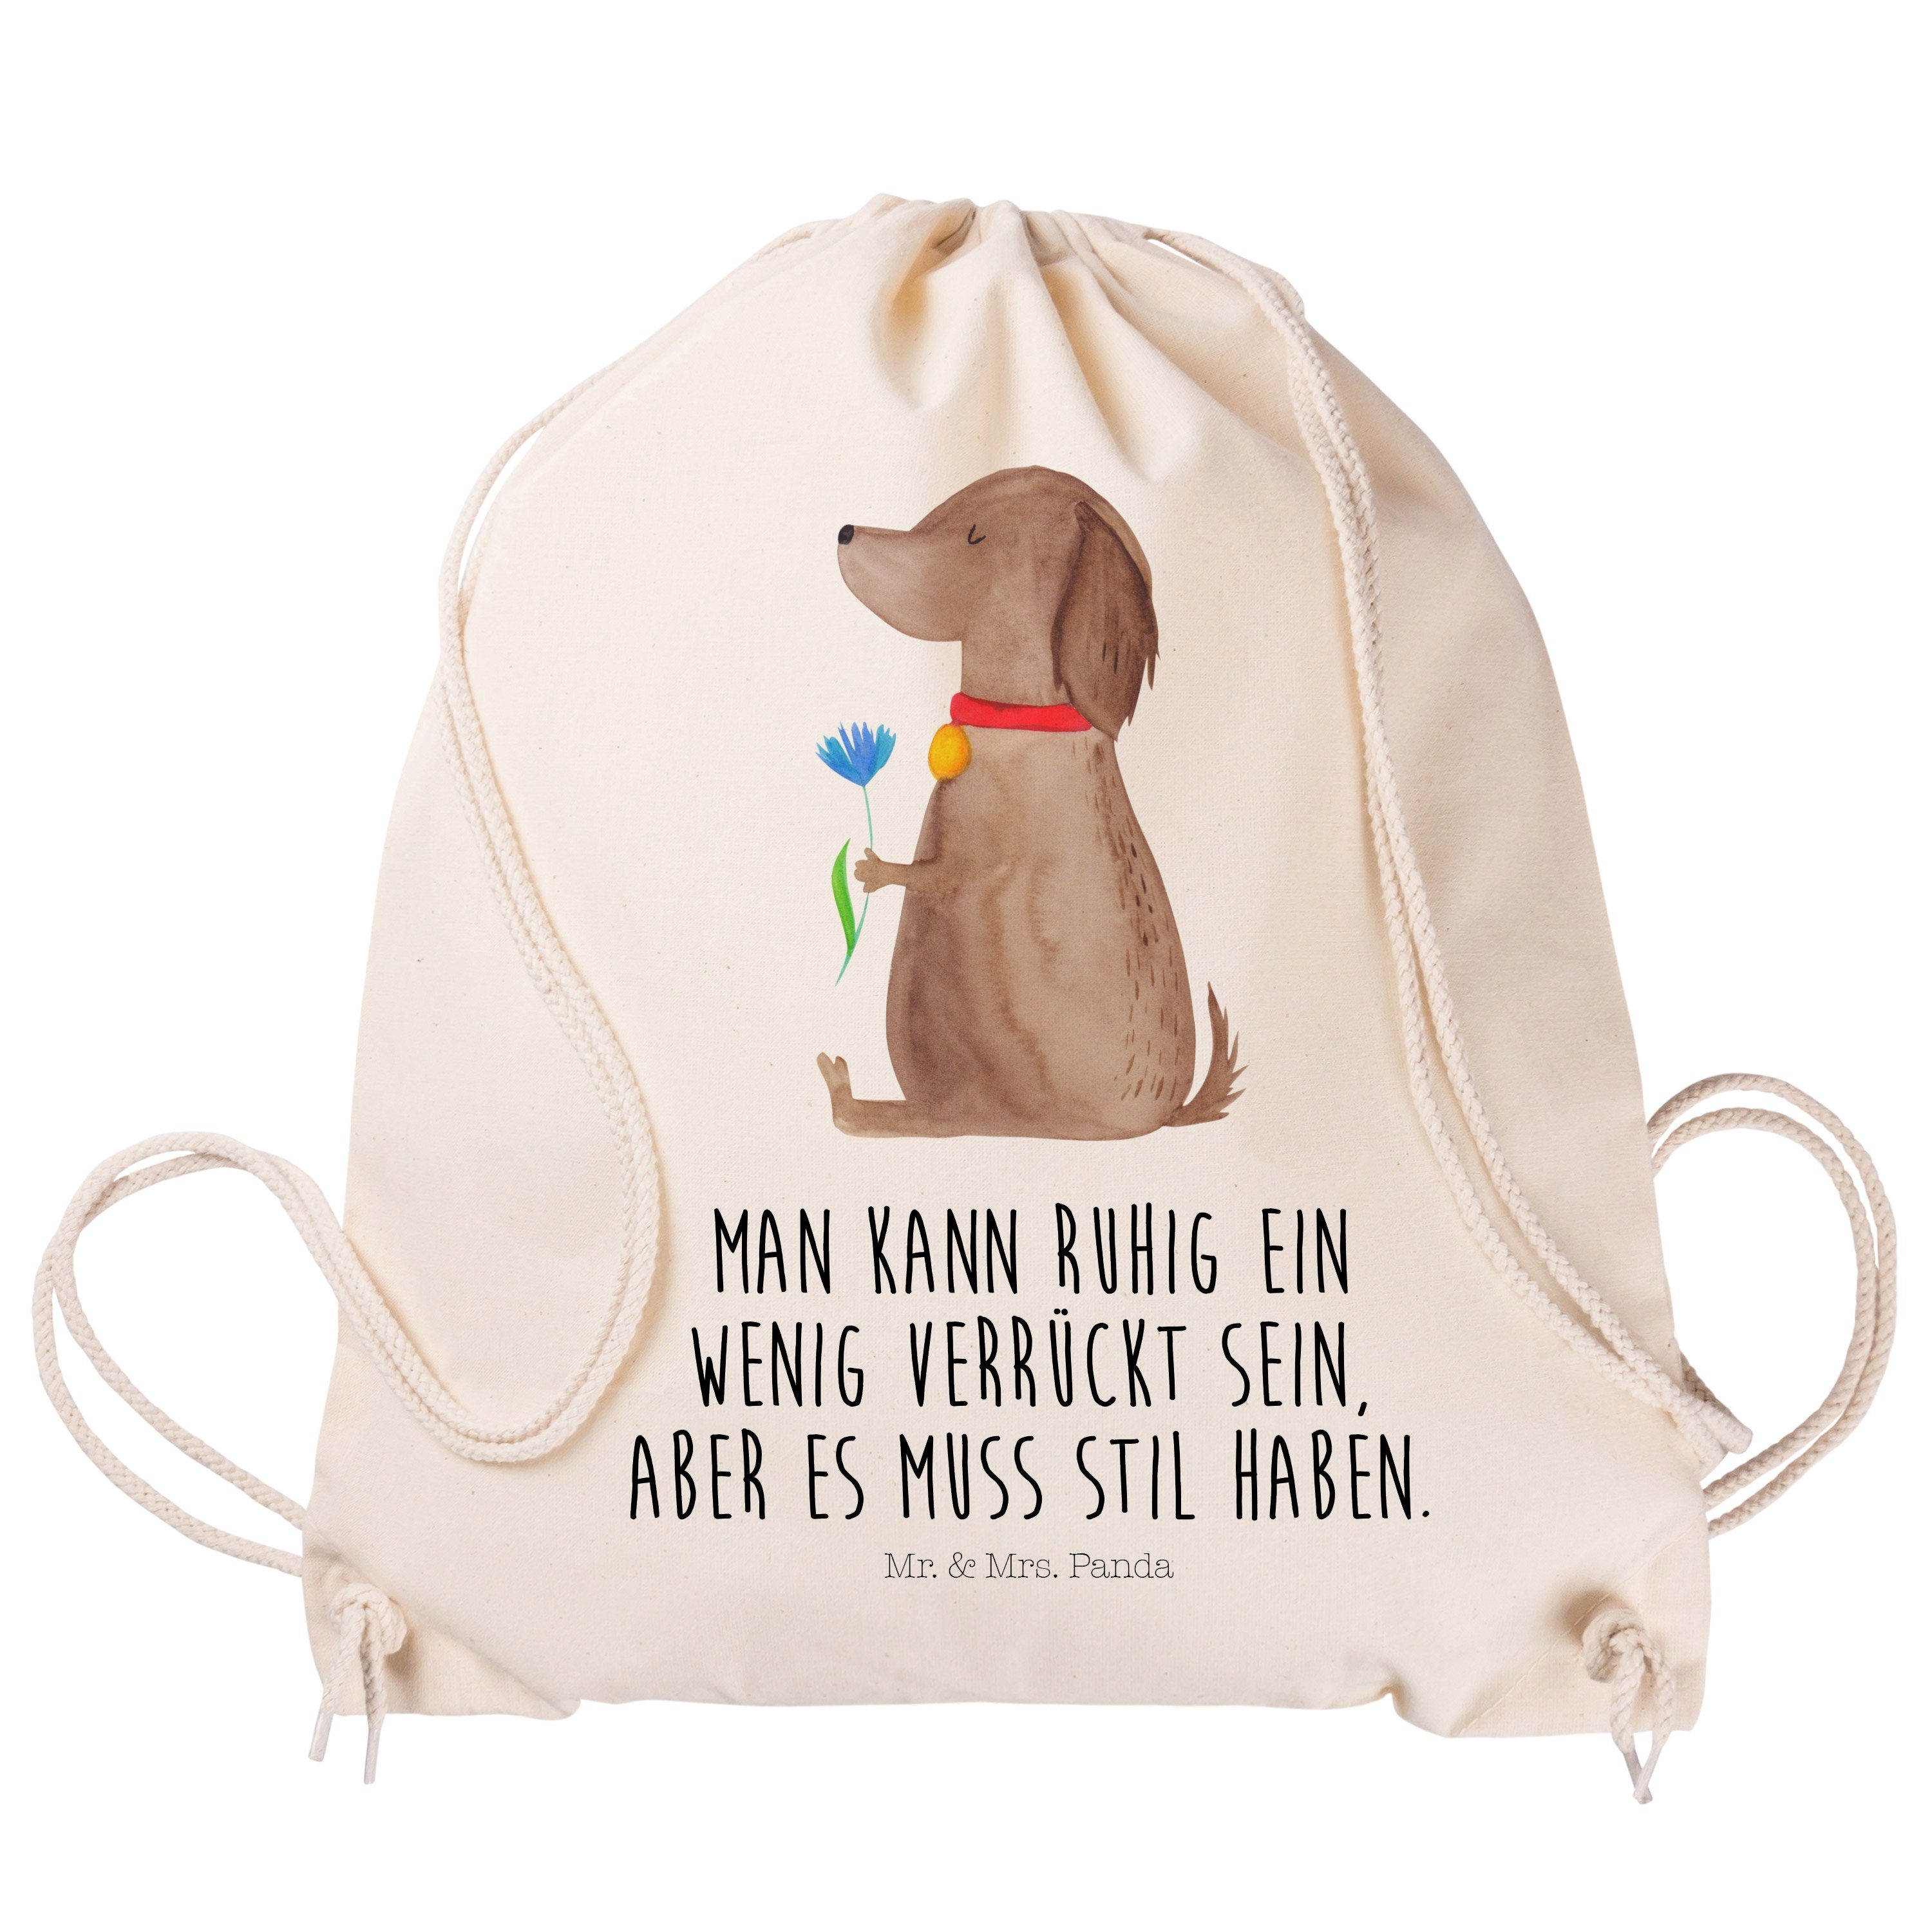 Blume Sporttasche, Mr. - Transparent Sportbeutel, & Mrs. Panda Hundem Sporttasche Geschenk, - (1-tlg) Hund